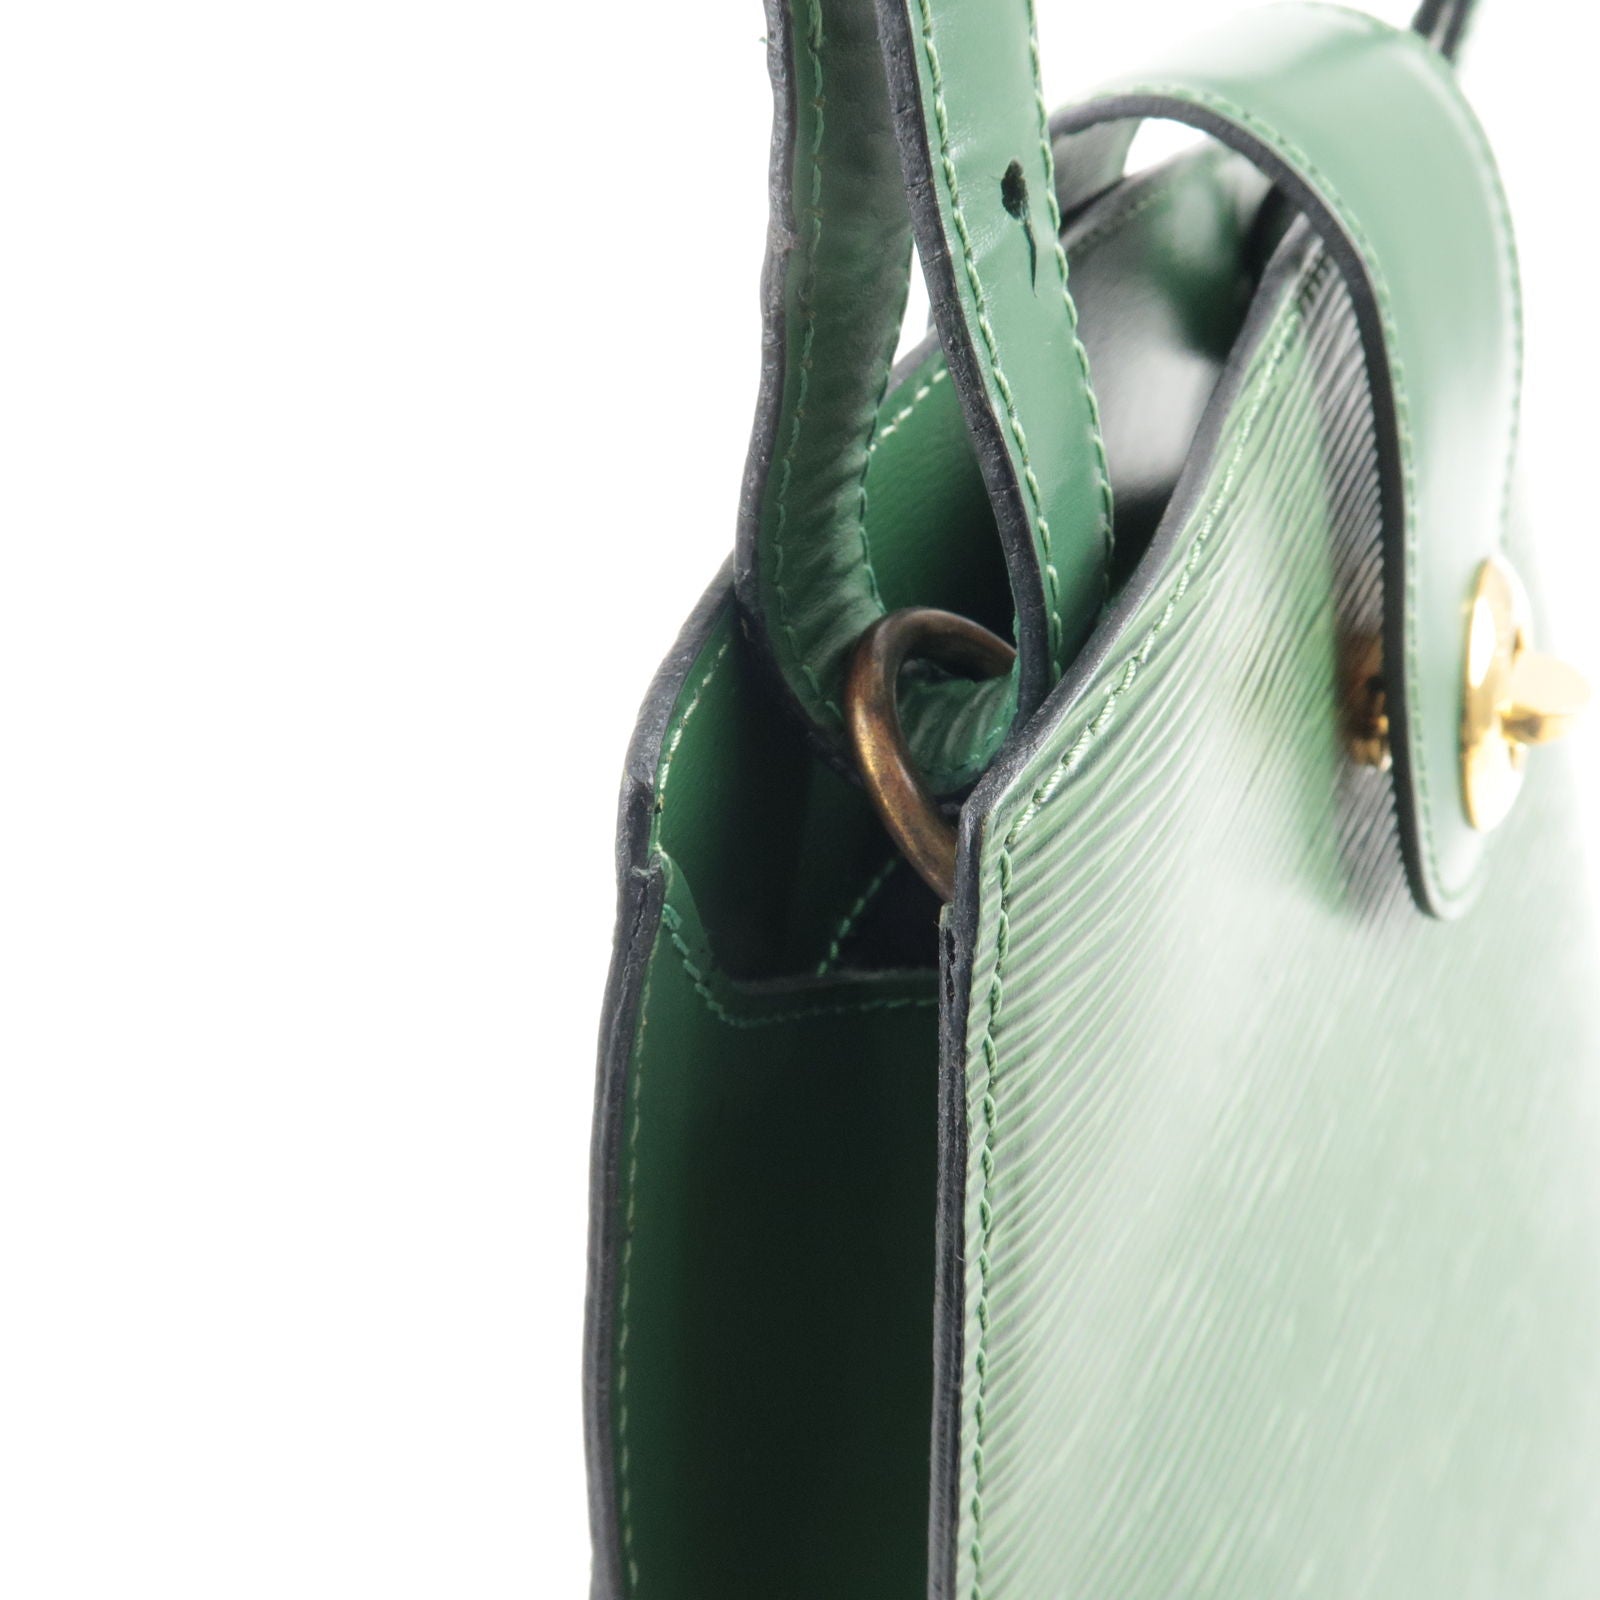 LOUIS VUITTON LV Capucines Used Shoulder Bag Green Epi Leather